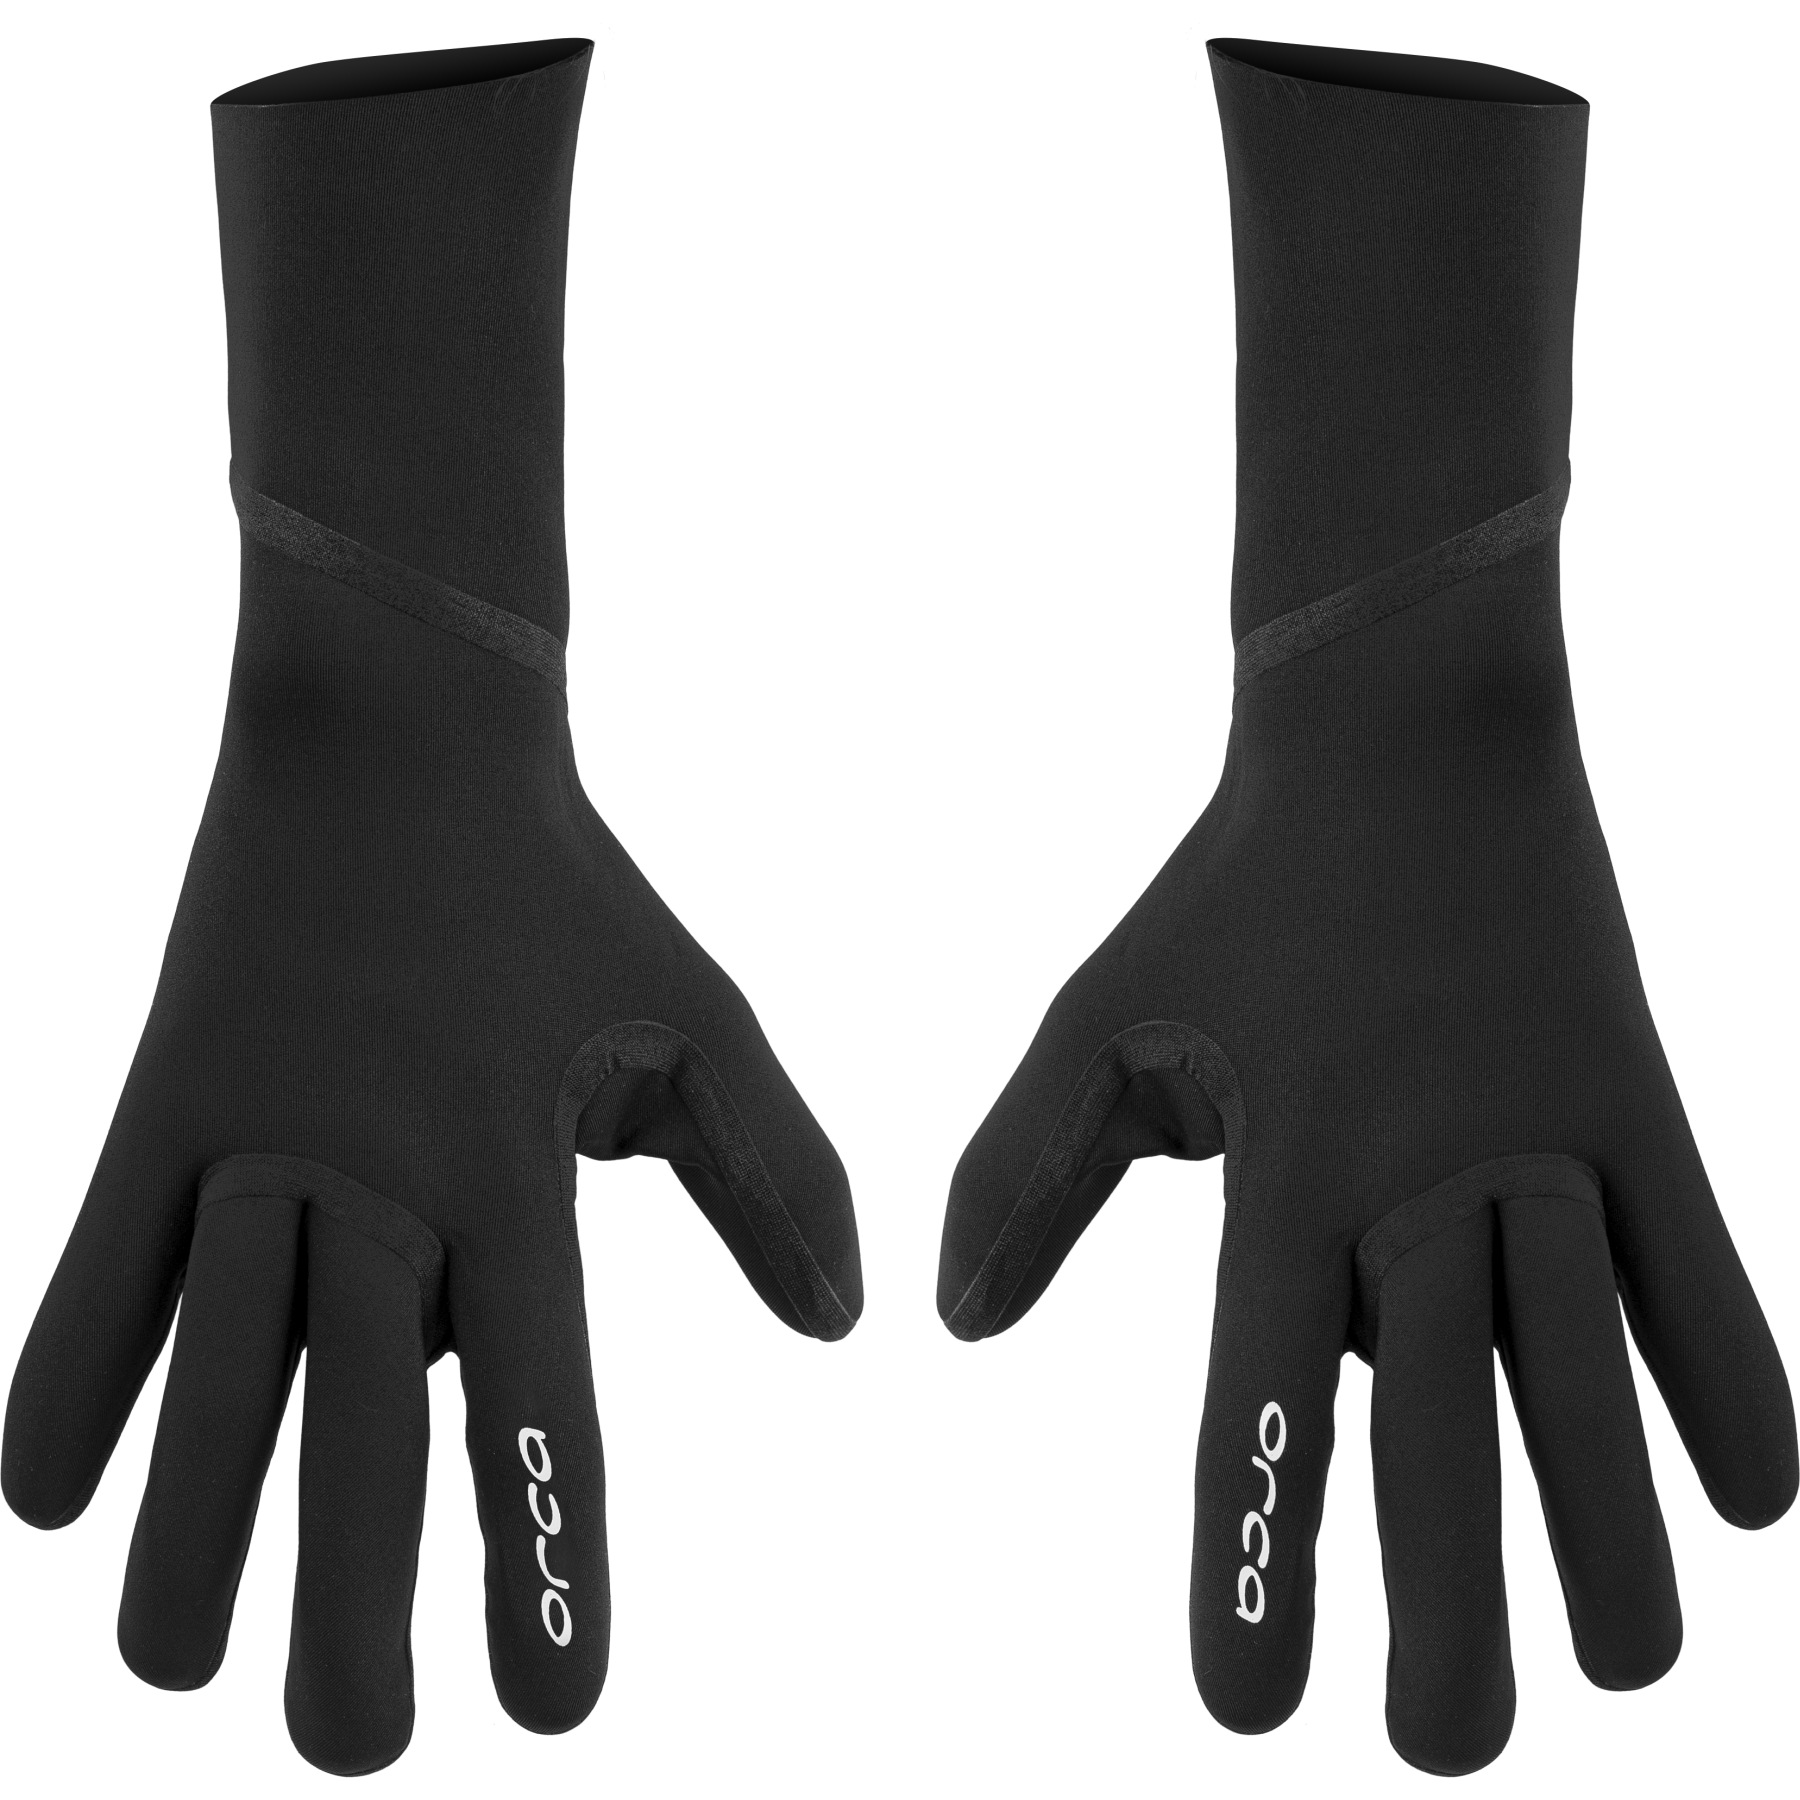 Productfoto van Orca Openwater Core Gloves - black